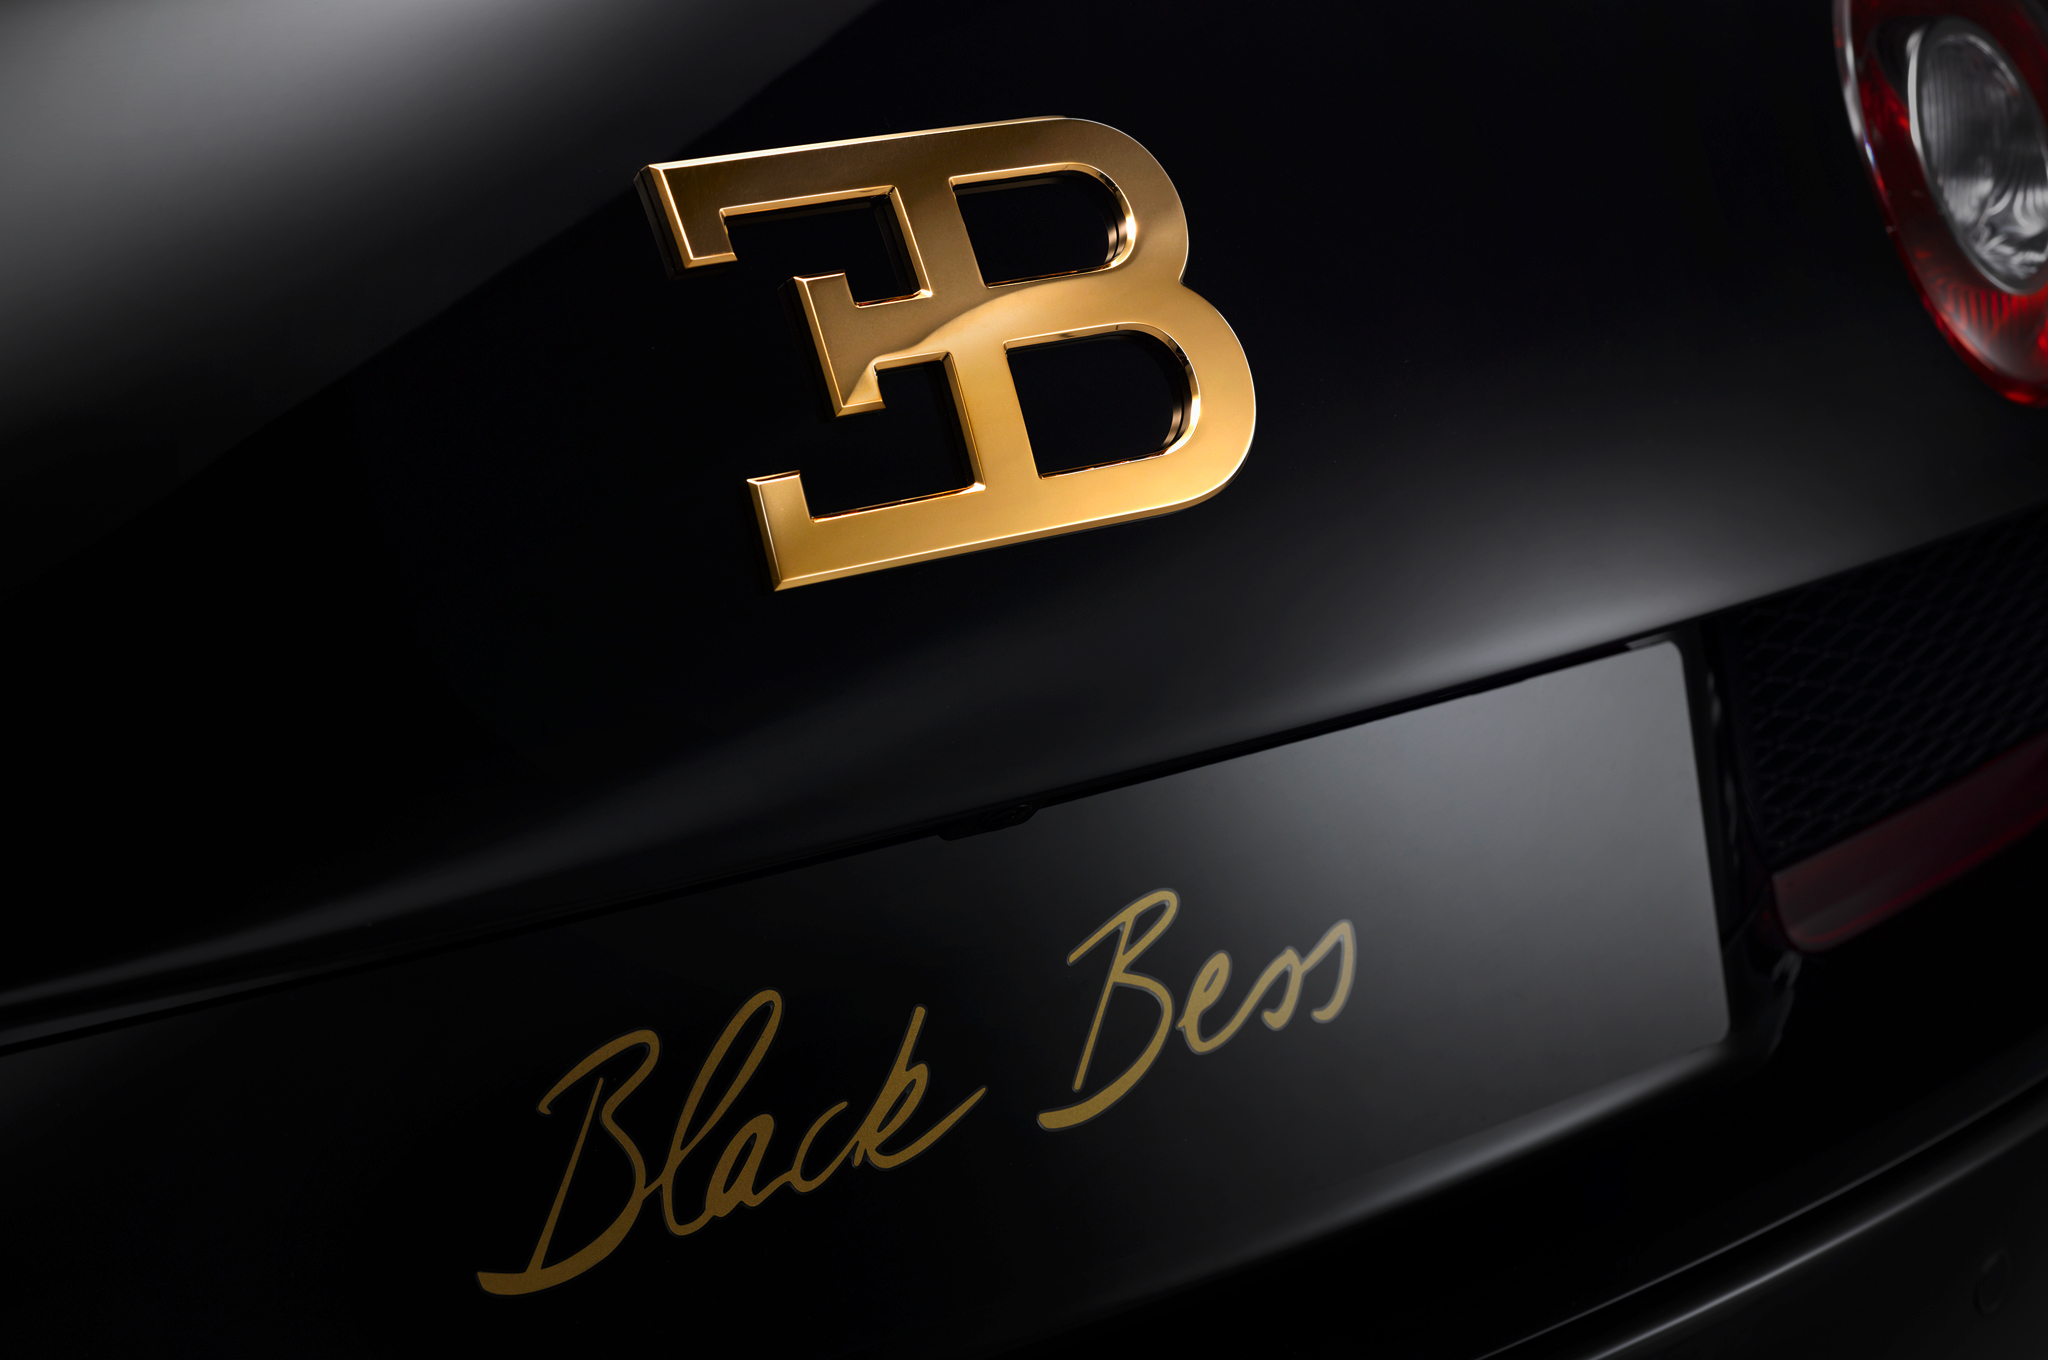 Bugatti 16.4 Veyron Grand Sport Vitesse Black Bess Unveiled Ahead of  Beijing Motor Show